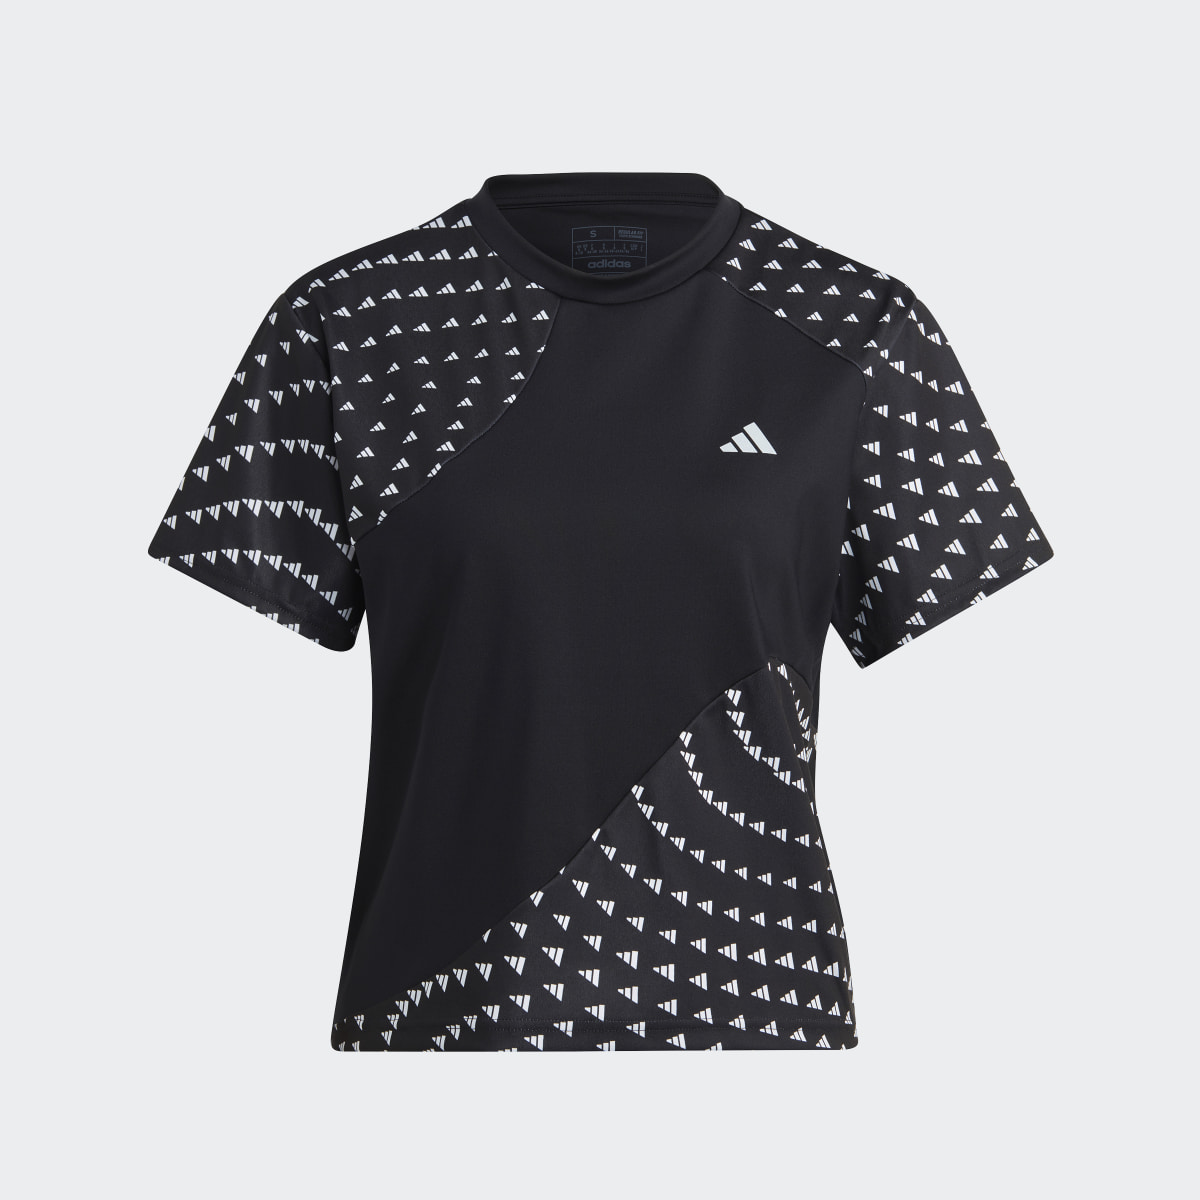 Adidas Run It Brand Love T-Shirt. 5